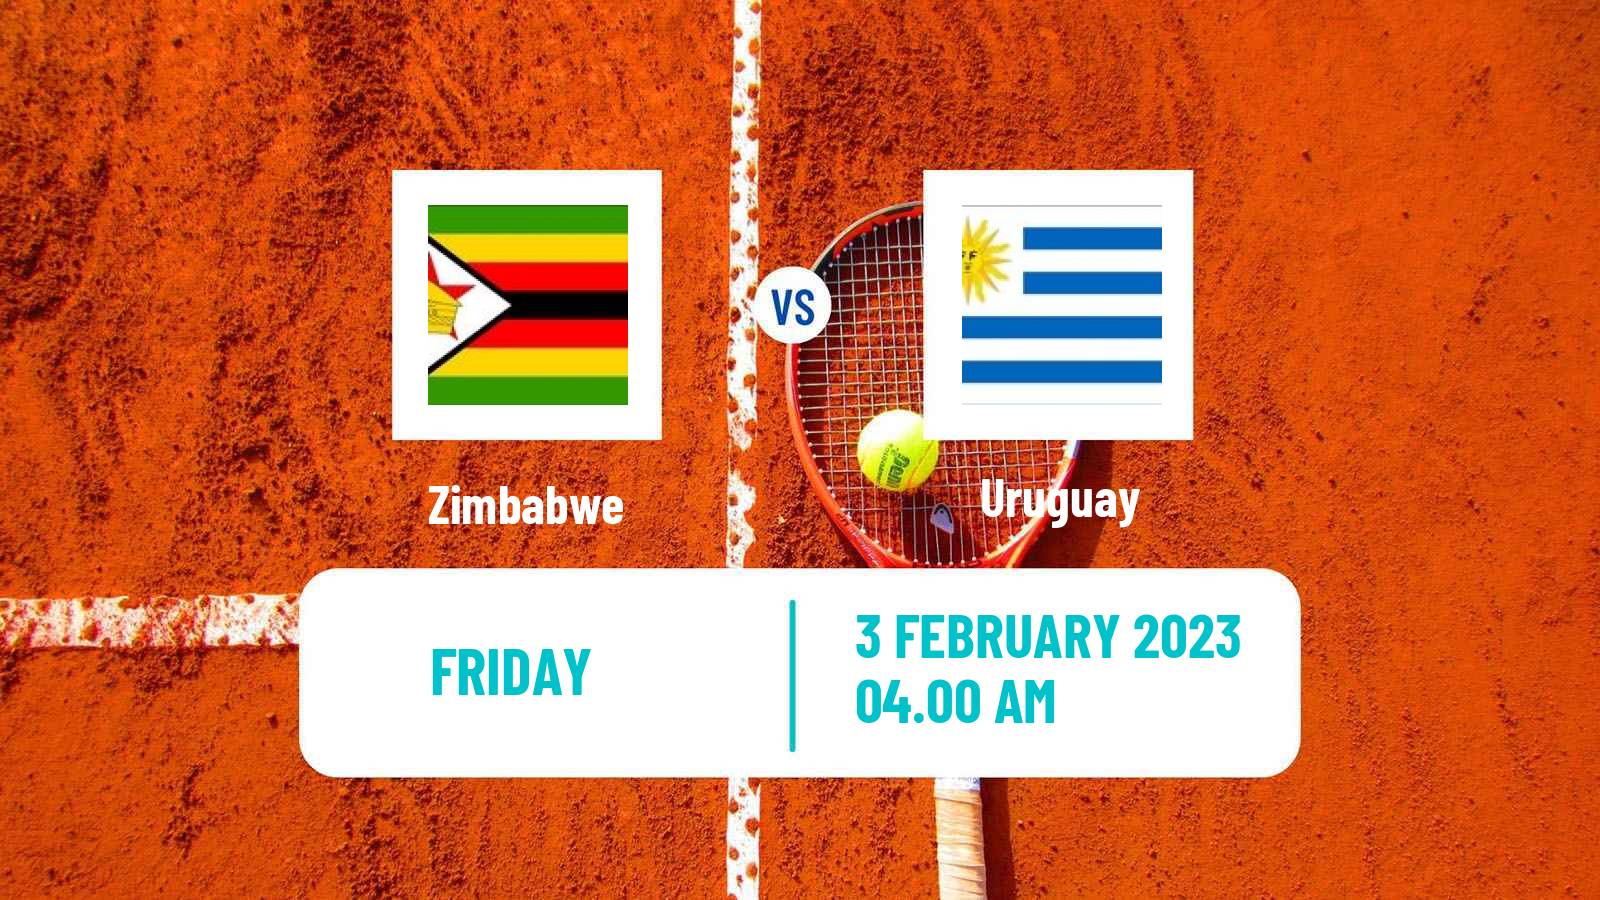 Tennis Davis Cup World Group II Teams Zimbabwe - Uruguay